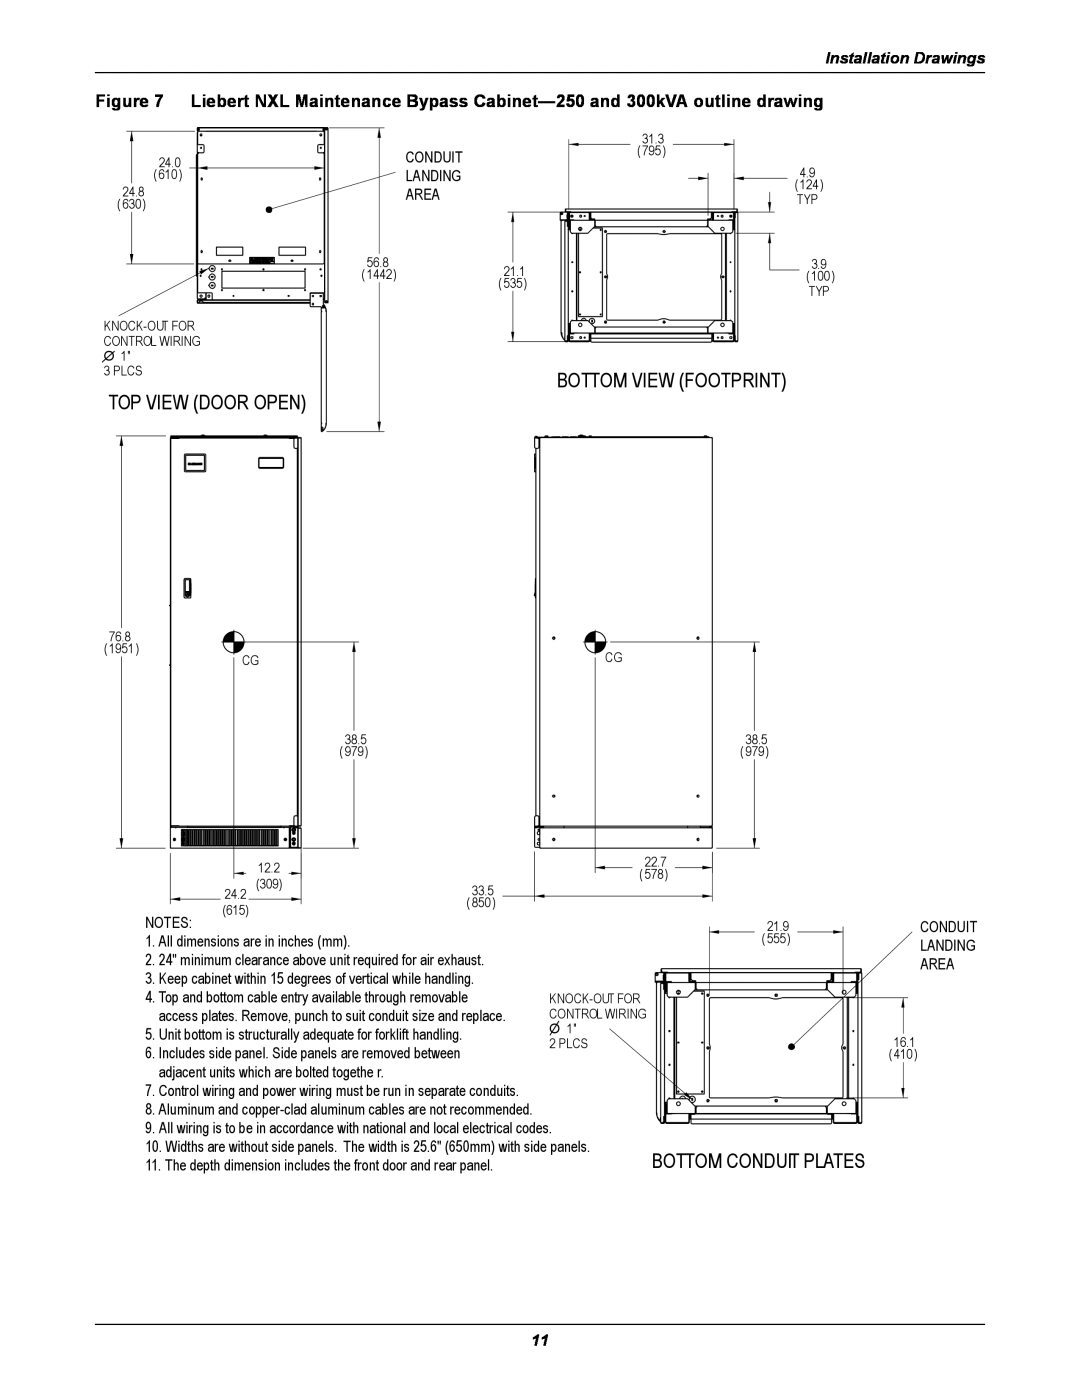 Emerson UPS Systems Top View Door Open, Bottom Conduit Plates, Bottom View Footprint, Installation Drawings 